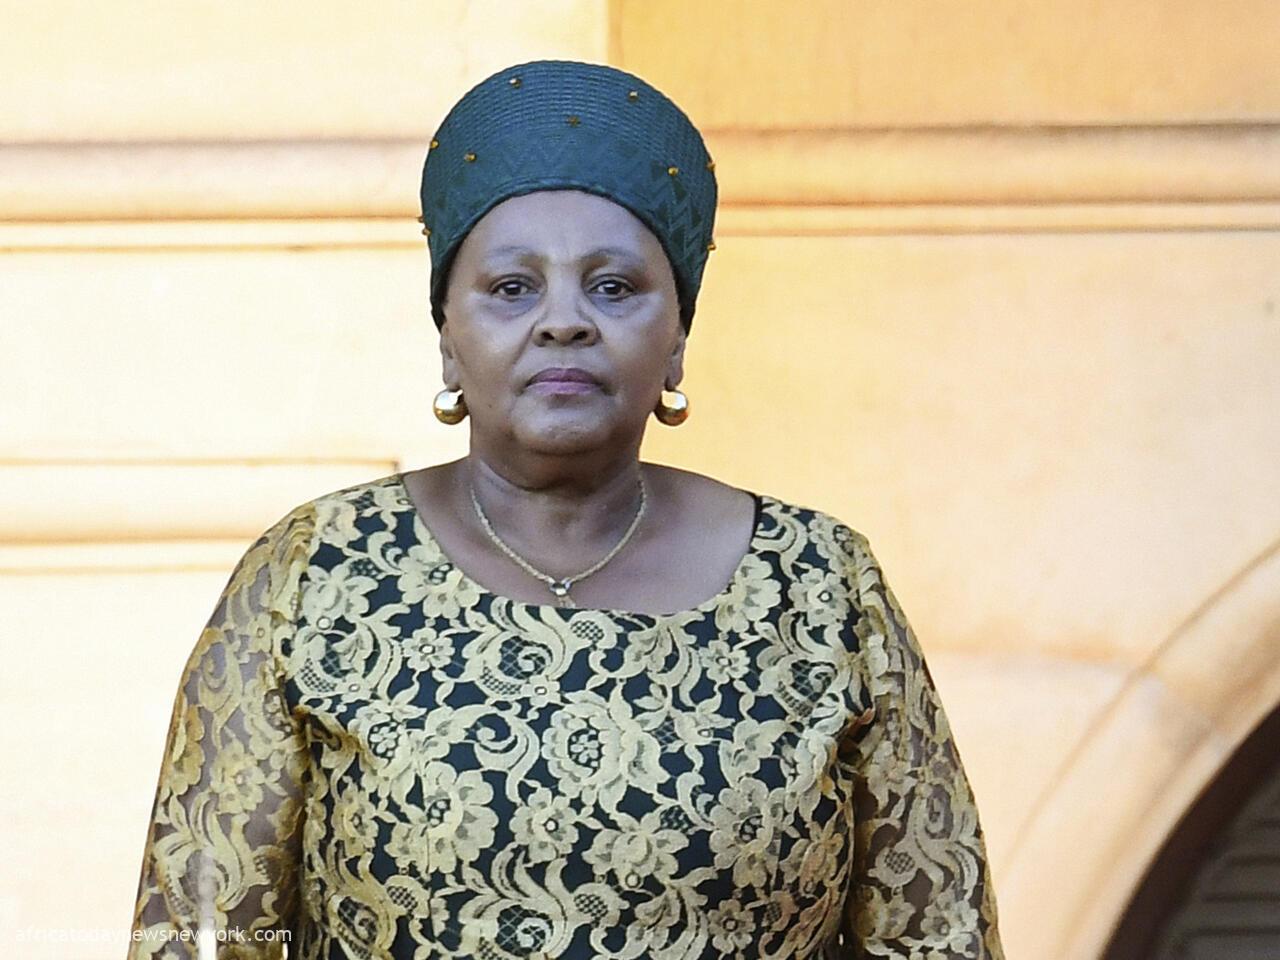 S'Africa’s Parliament Speaker Resigns Over Corruption Probe